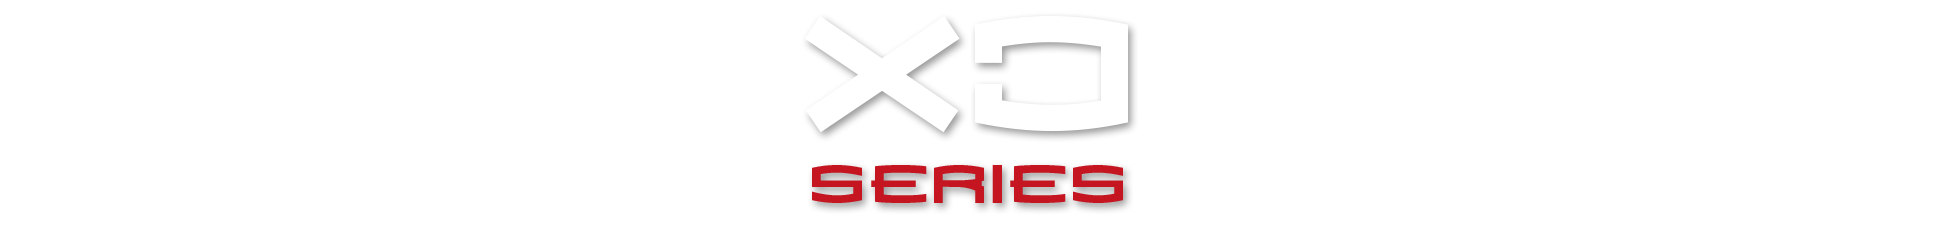 XO Series